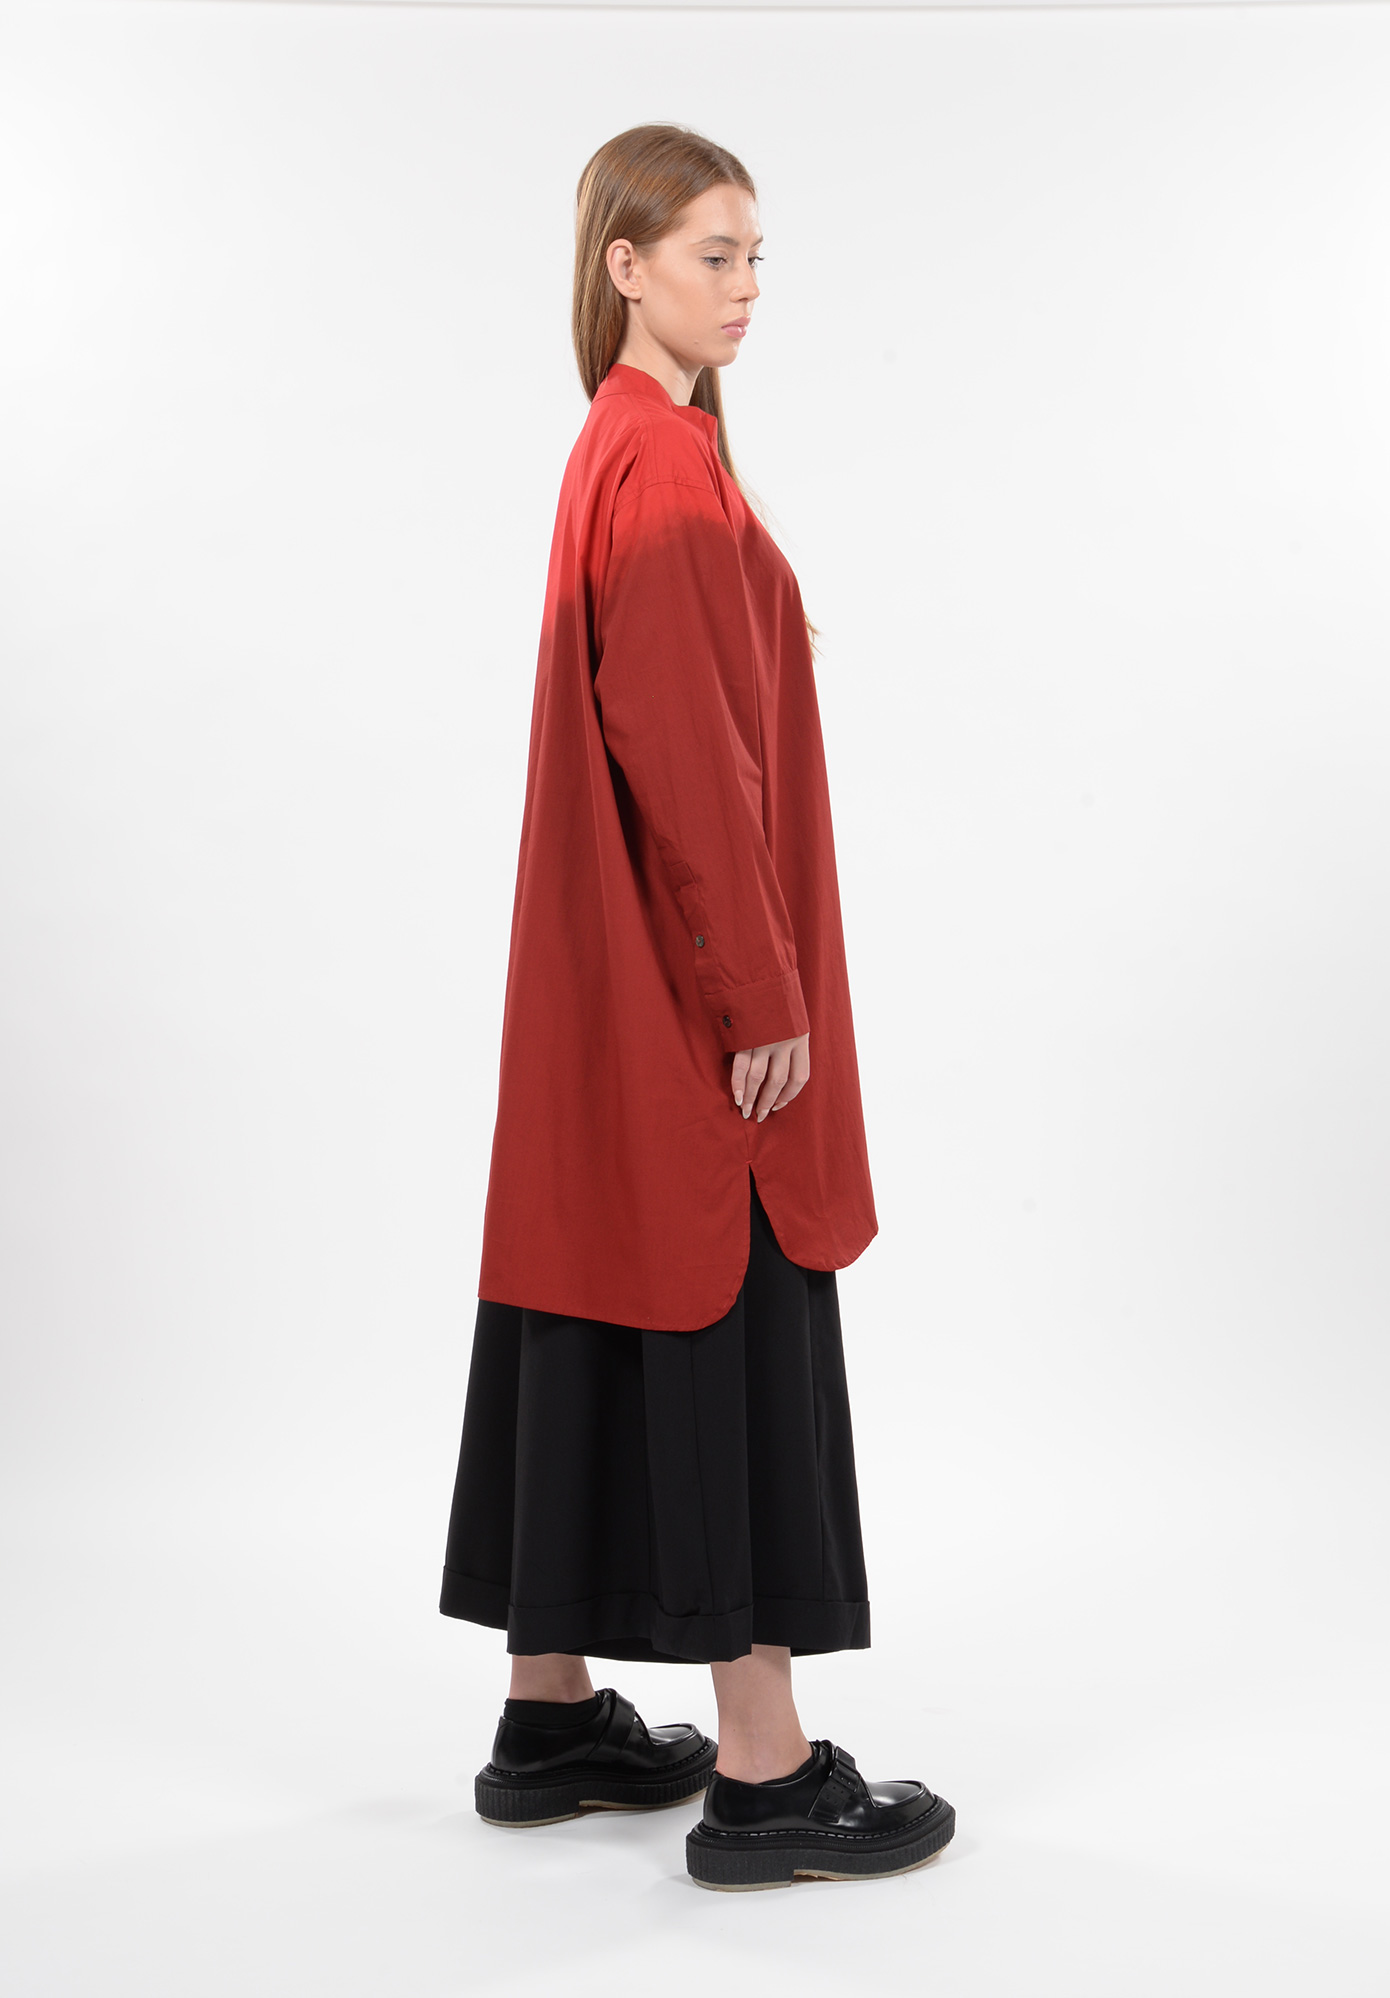 MOYURU - OMBRE SHIRT DRESS - RED | PURPLE